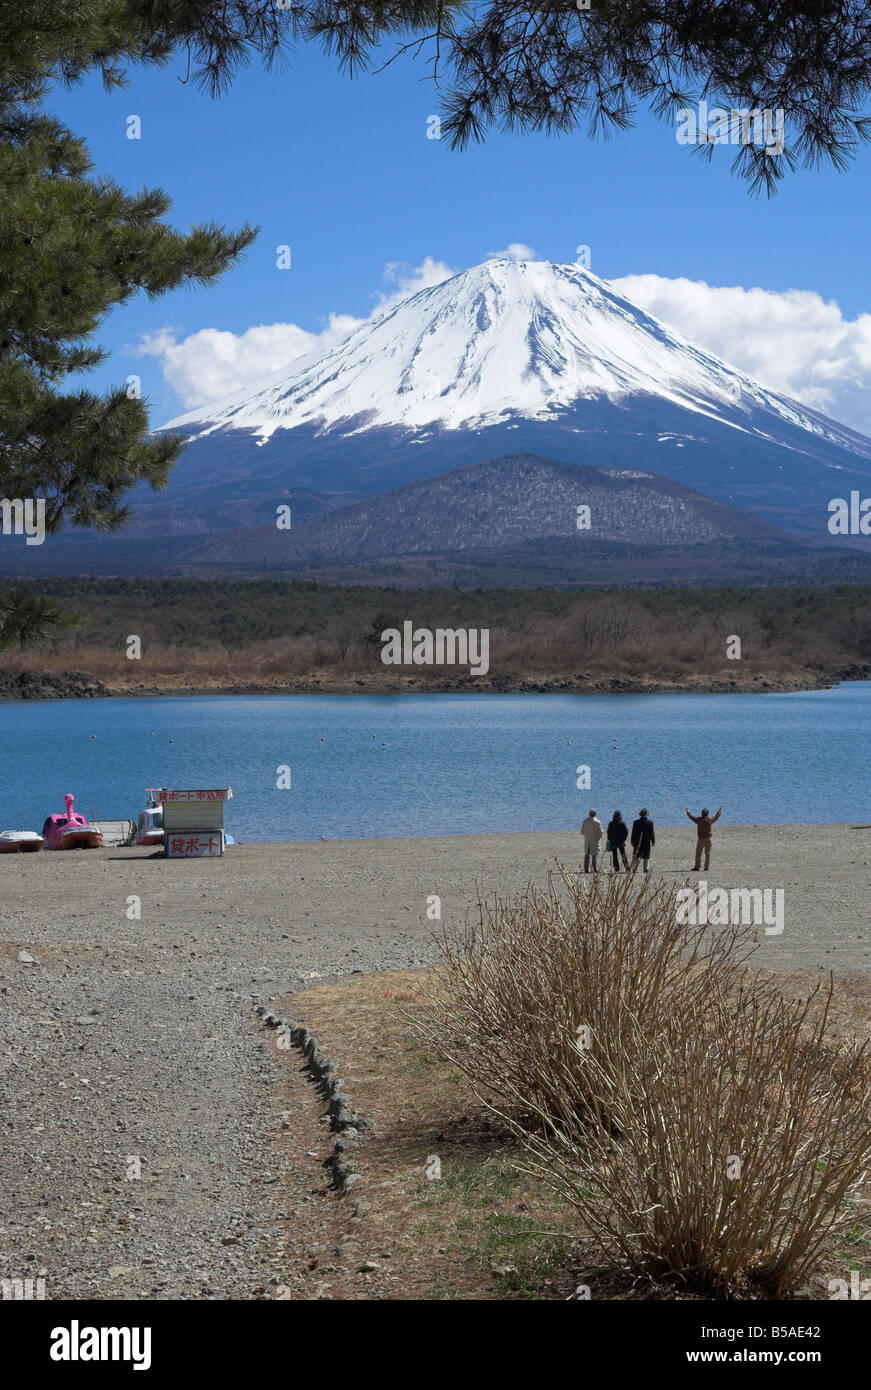 Four people beside Lake Shoji, with Mount Fuji behind, Shojiko, Central Honshu, Japan Stock Photo